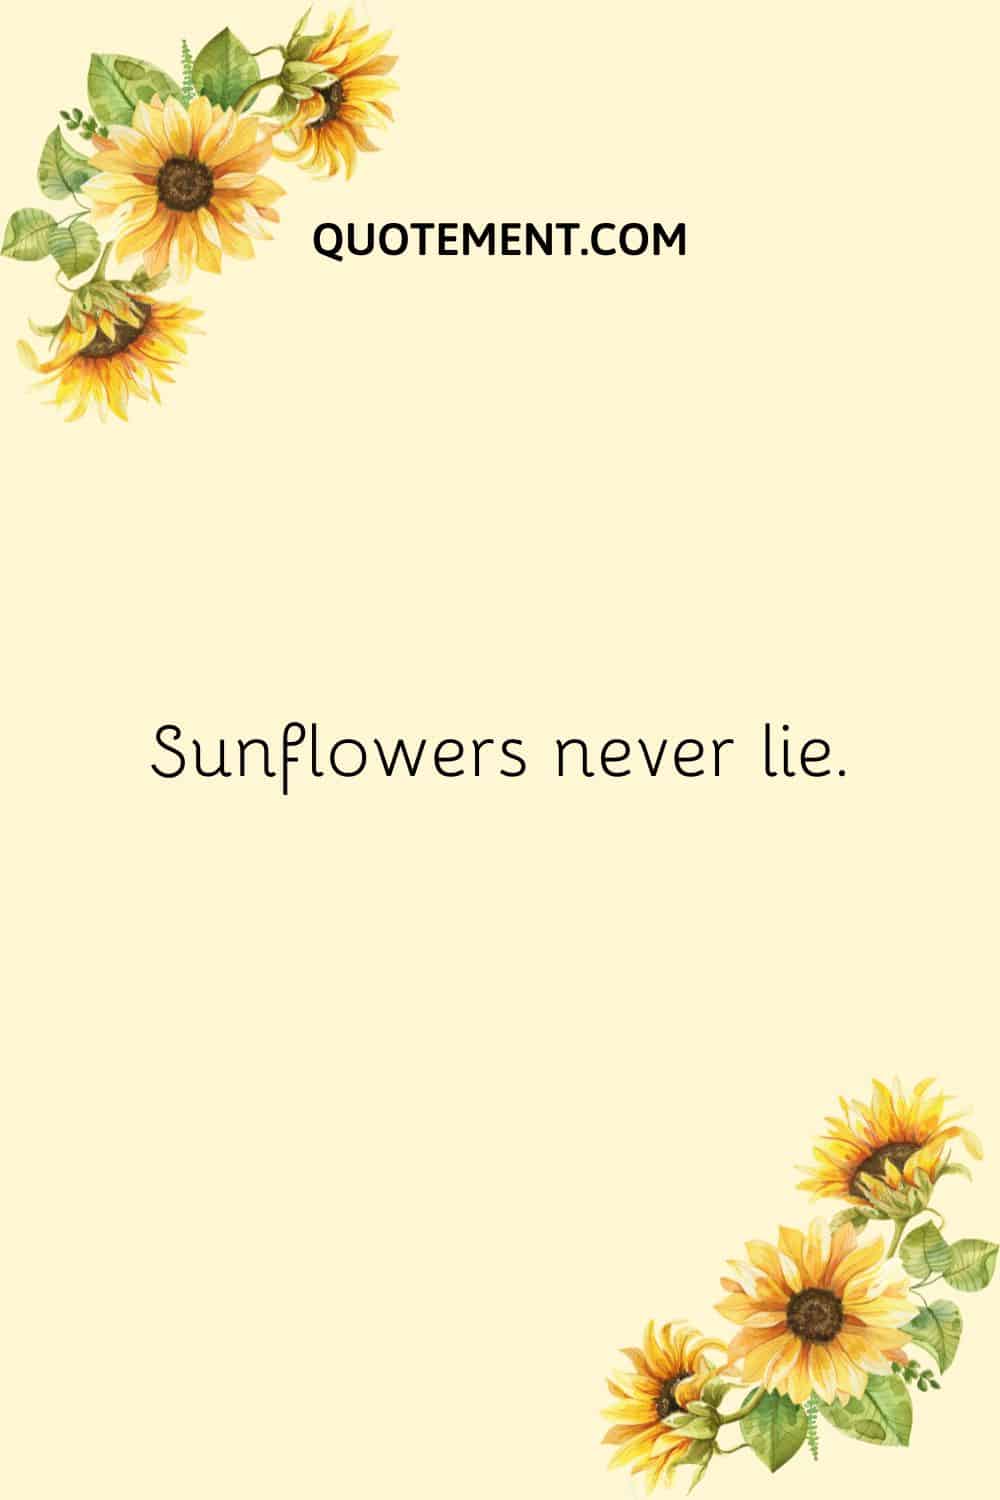 Sunflowers never lie.